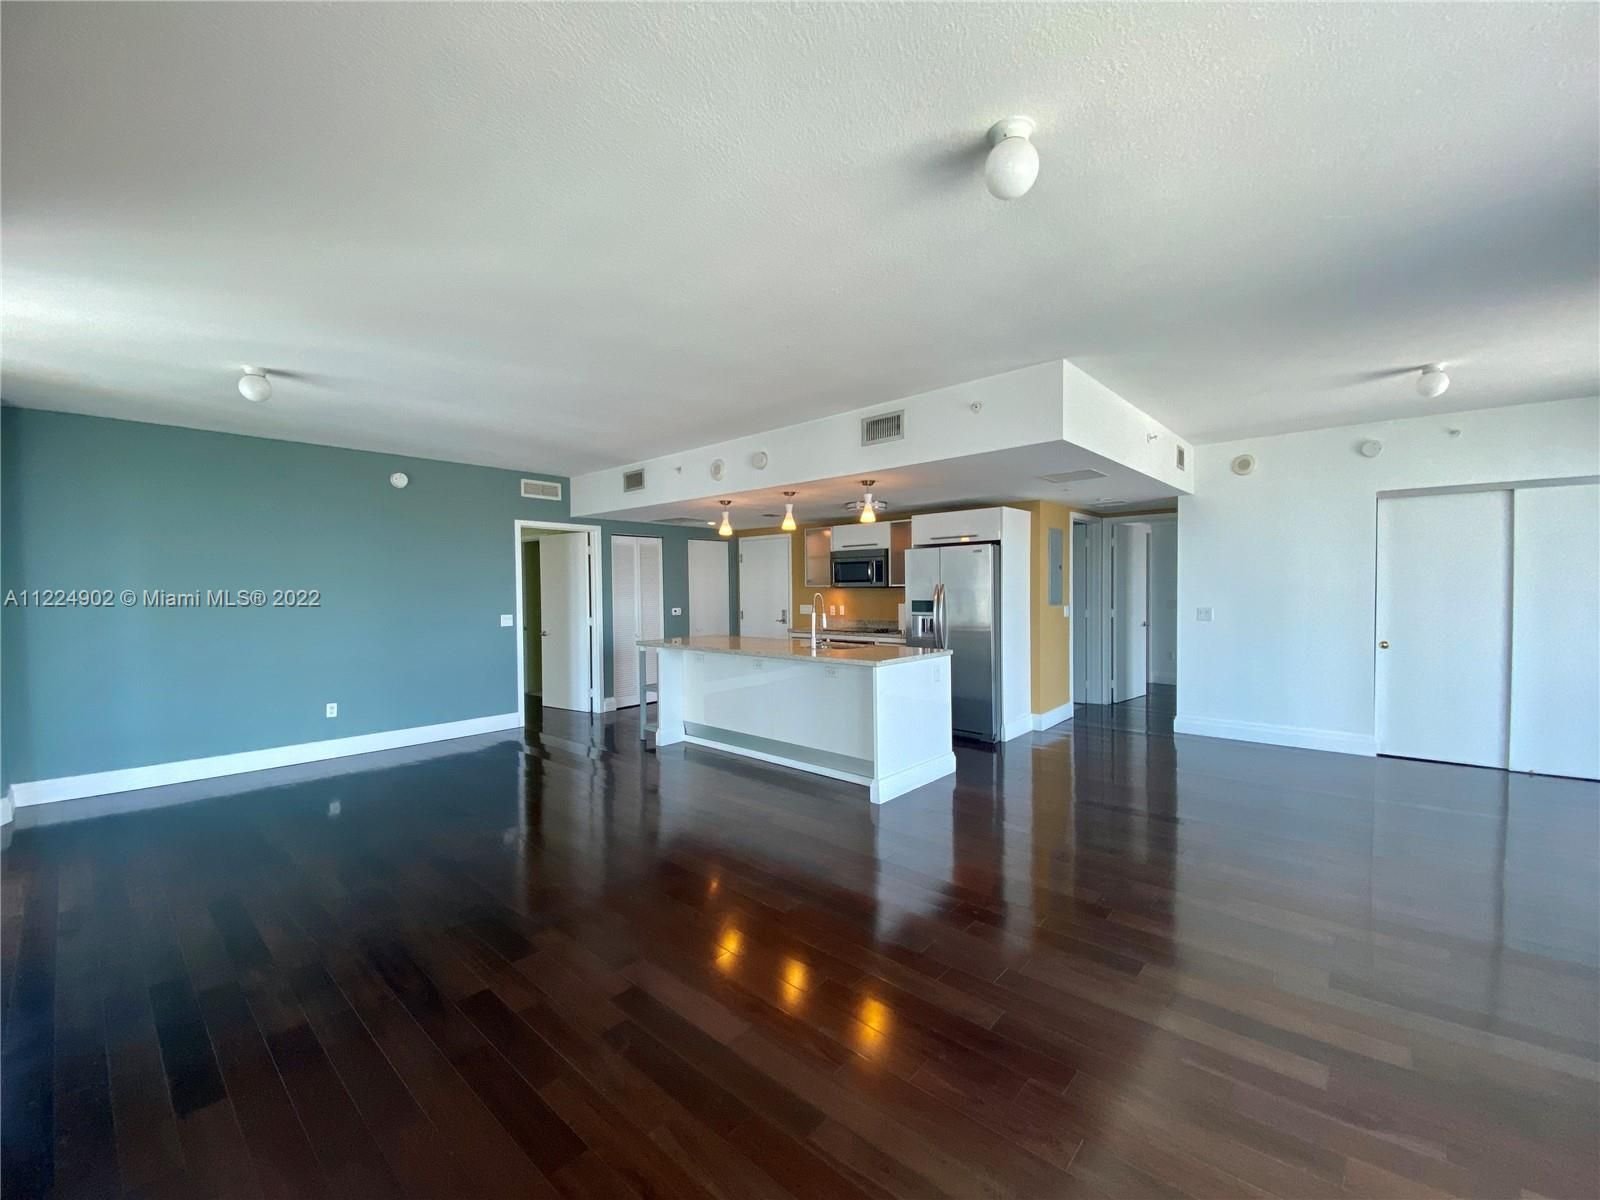 Real estate property located at 185 7th St #2011, Miami-Dade County, Miami, FL